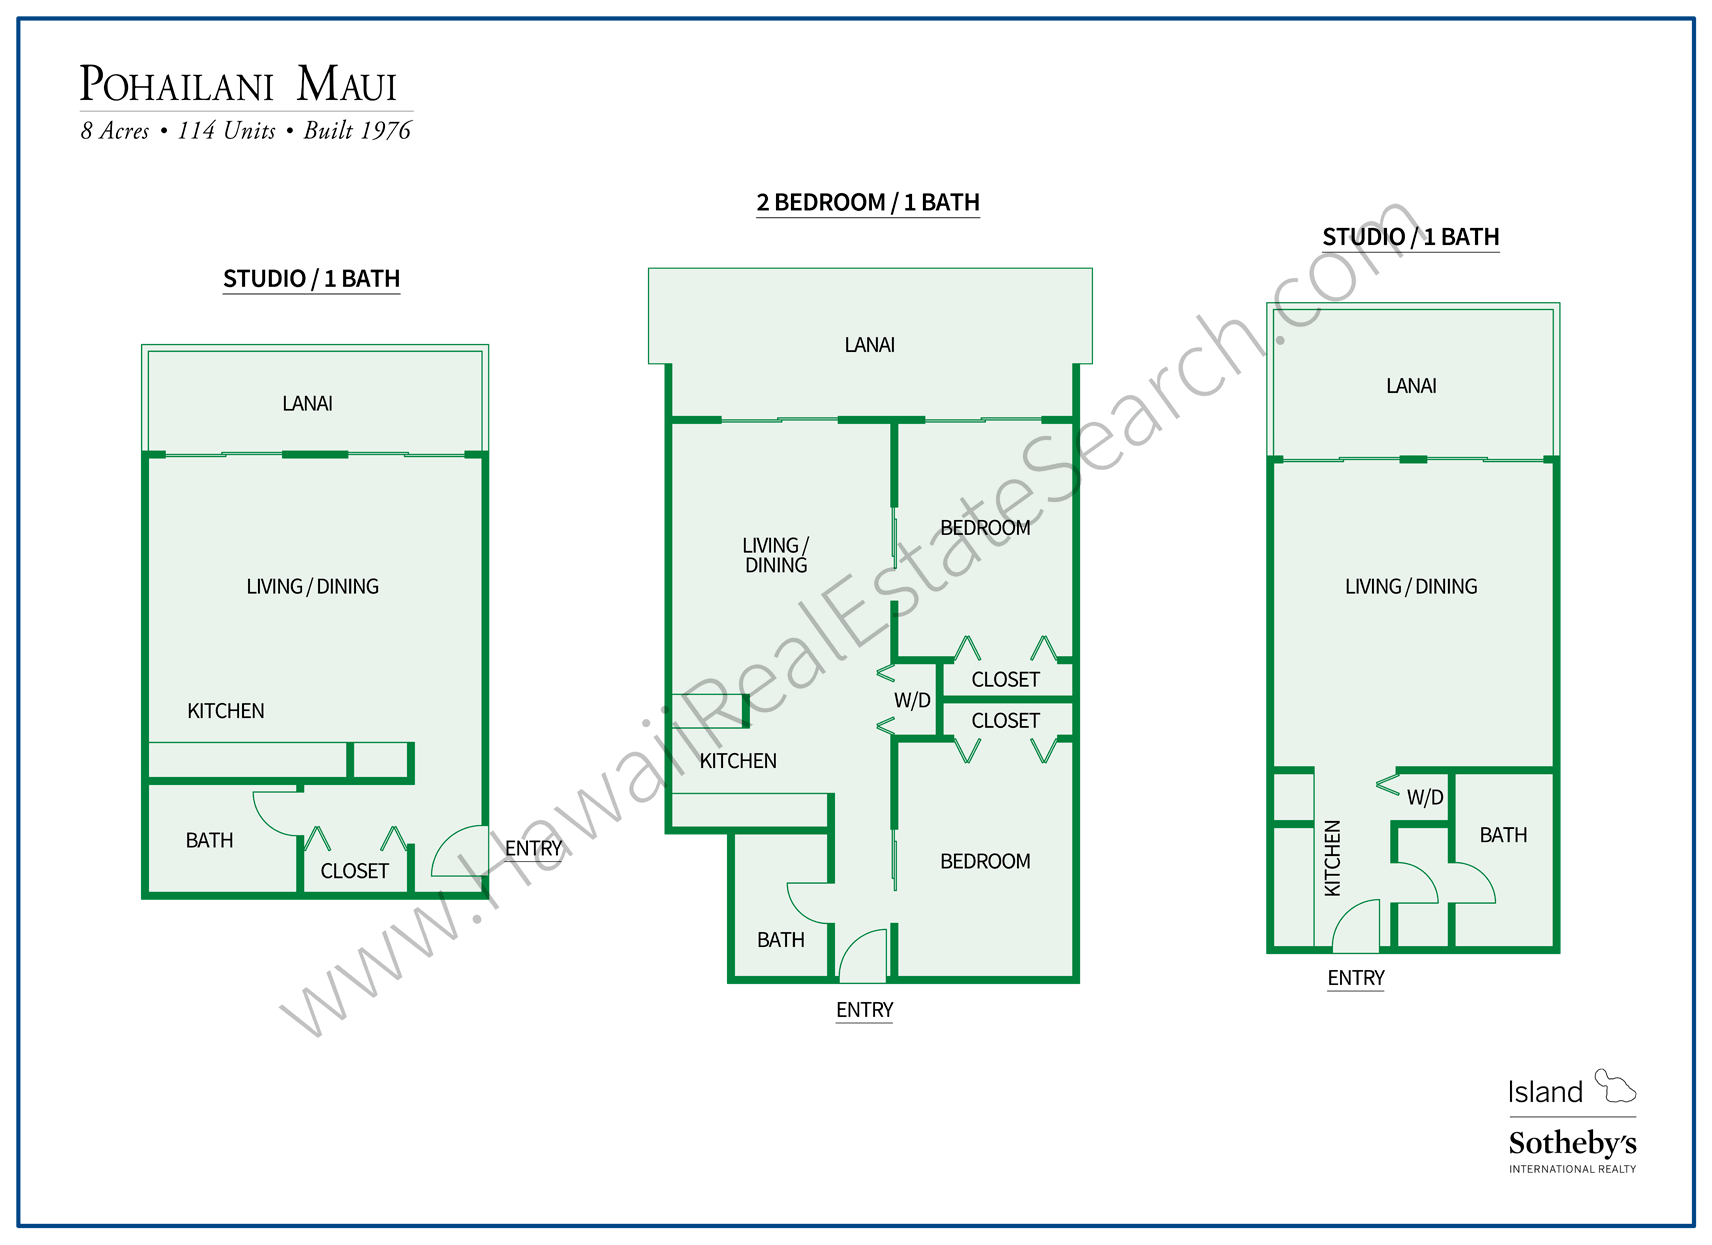 Pohailani Maui Floor Plan